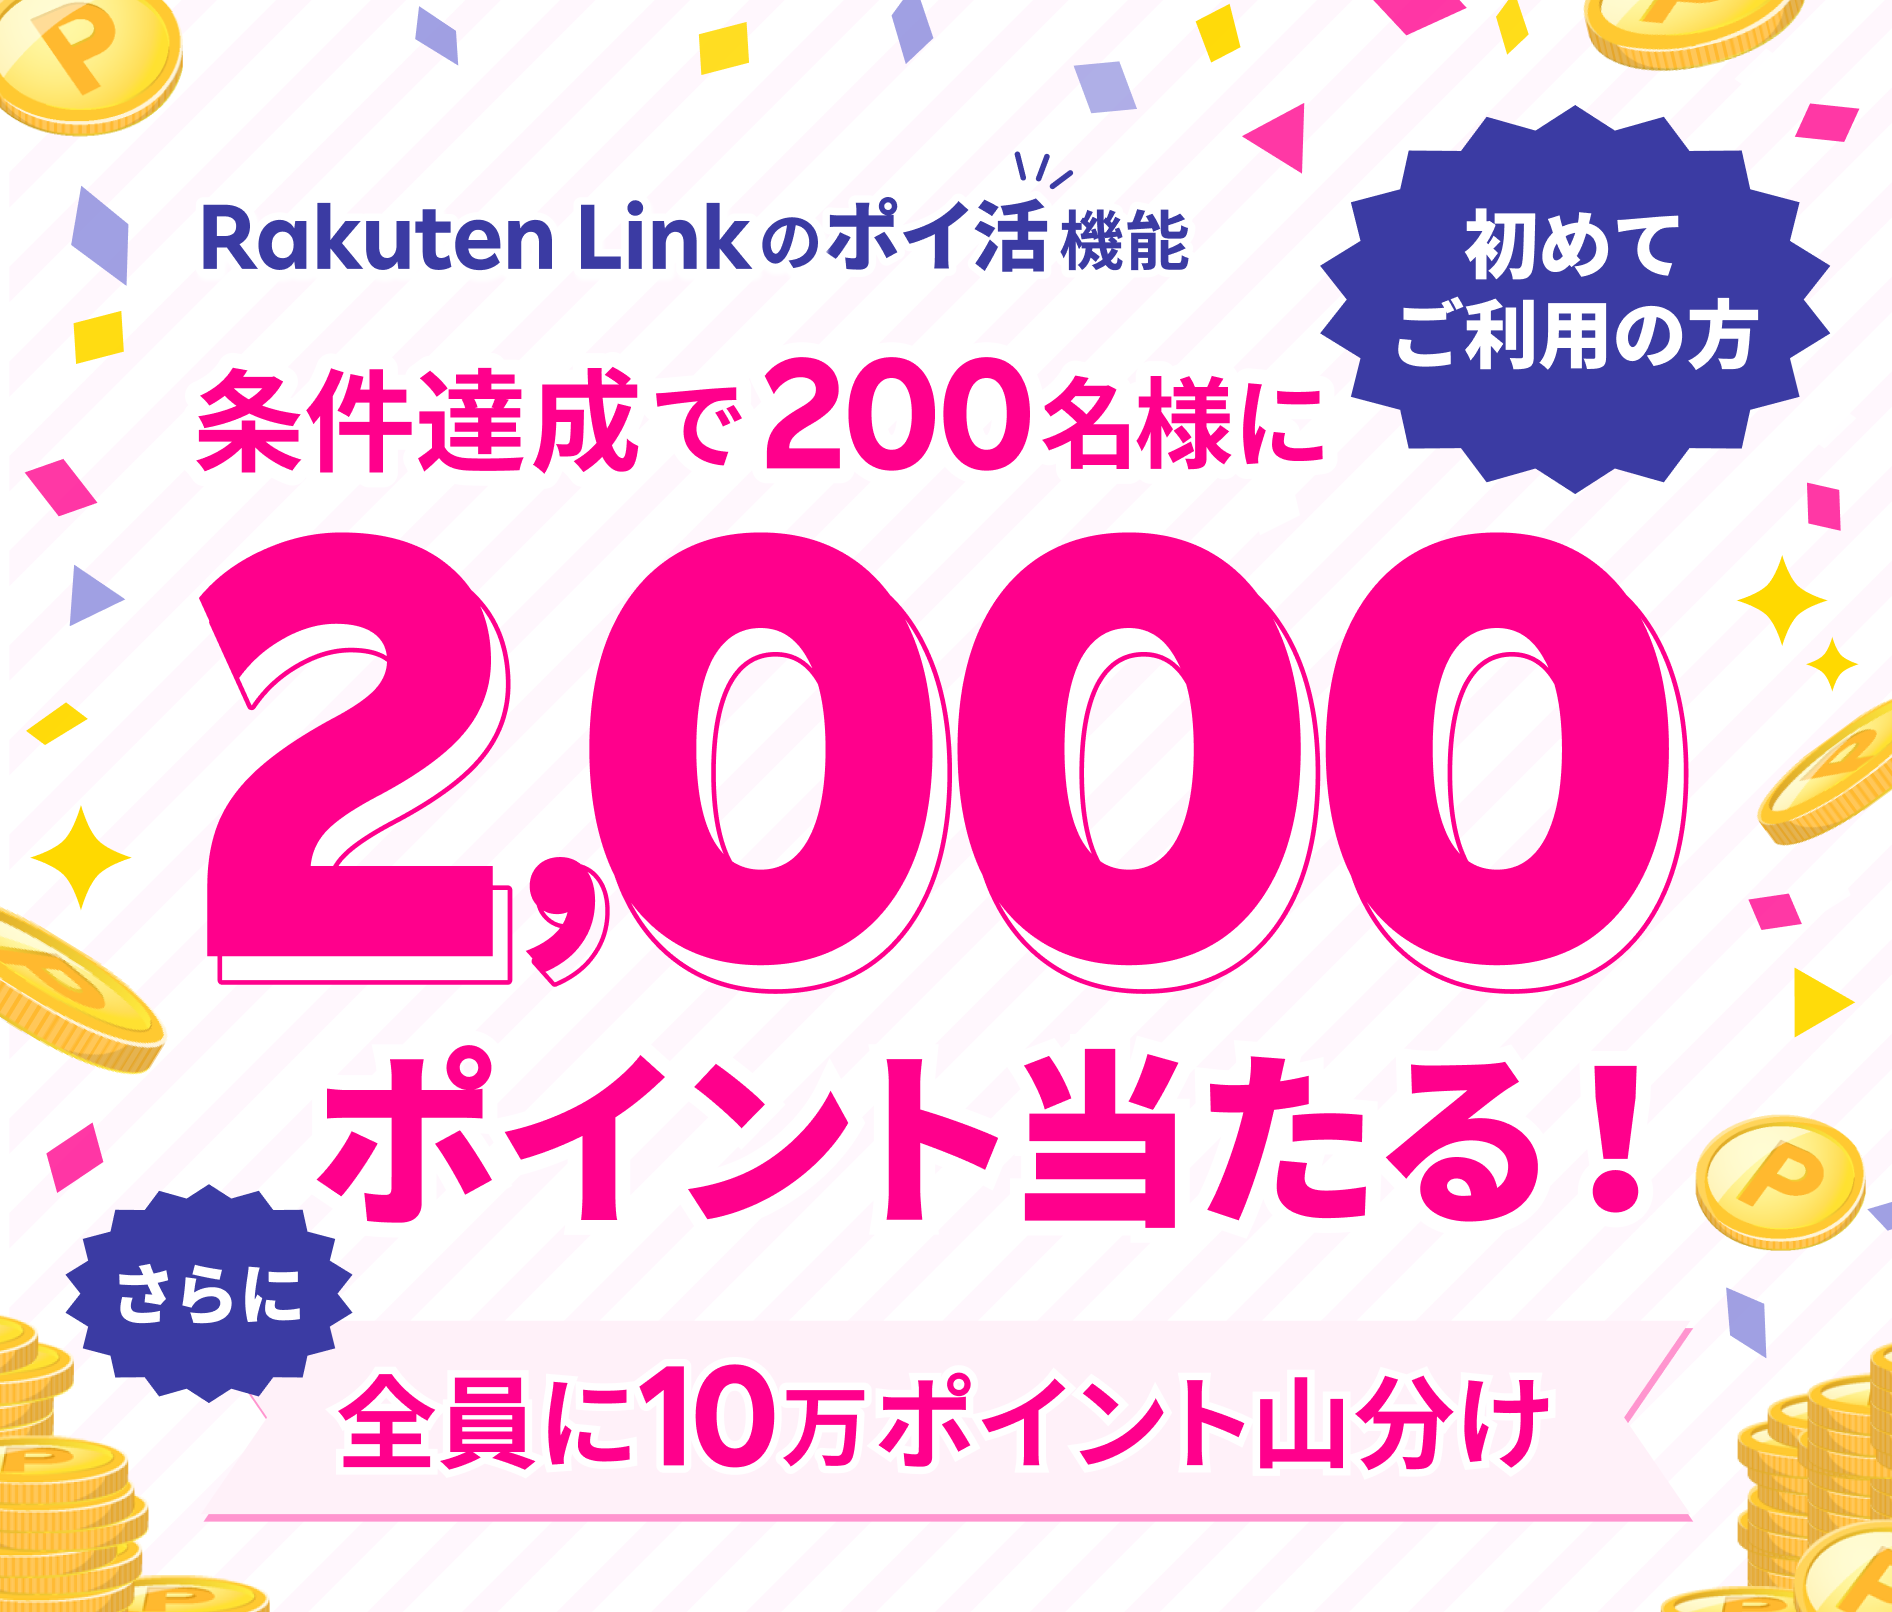 Rakuten Link のポイ活機能 初めてご利用の方 条件達成で200名様に2,000ポイント当たる！さらに全員に10万ポイント山分け ※要エントリー